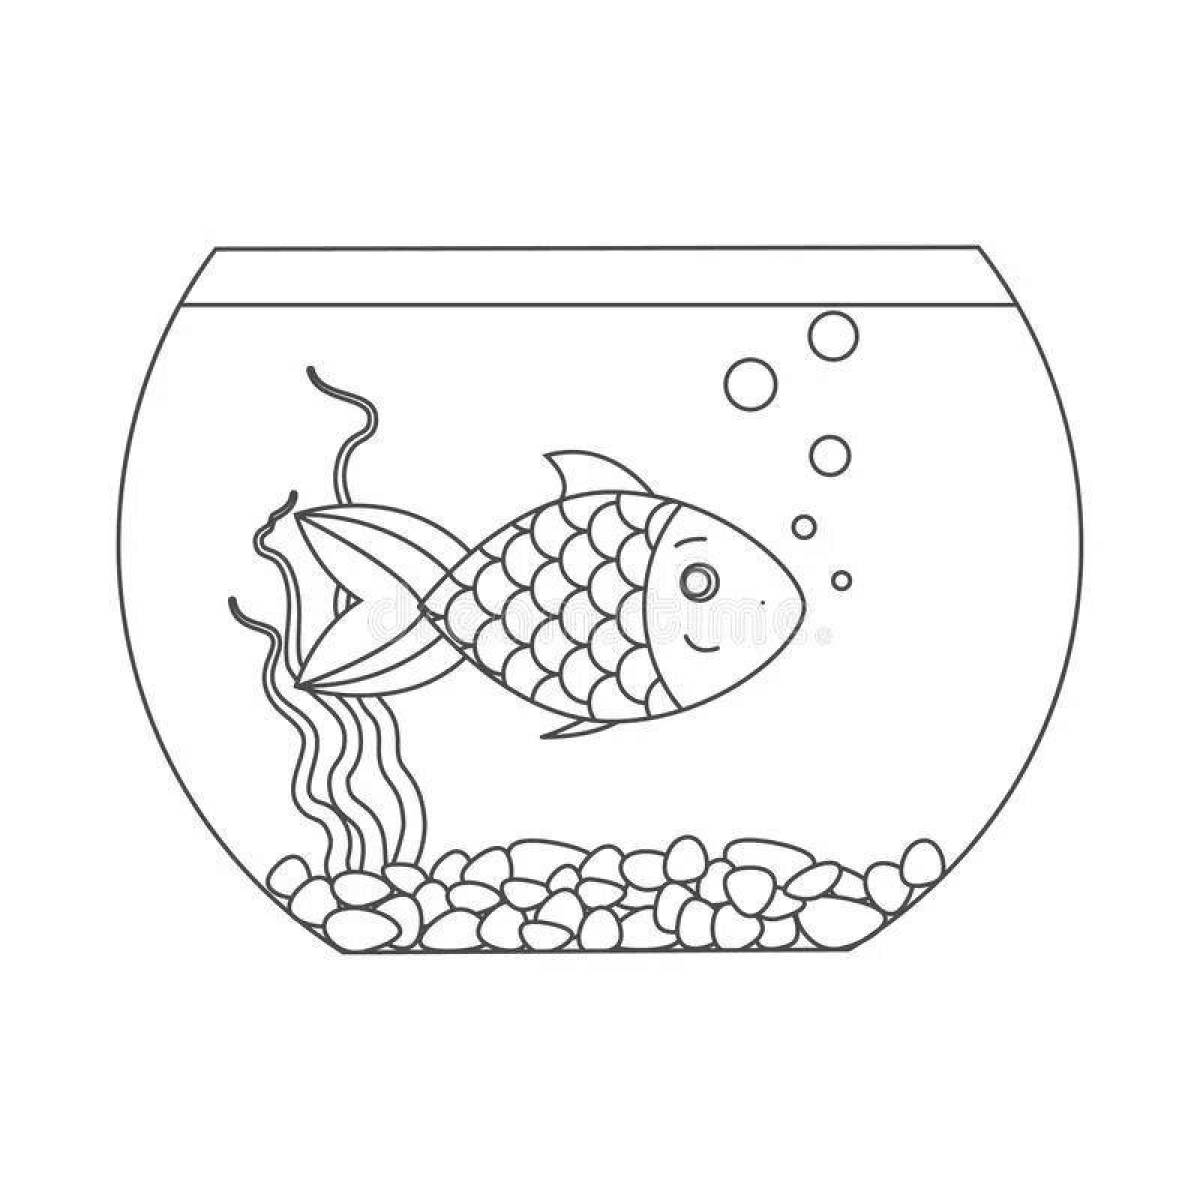 Playful fish swimming in an aquarium